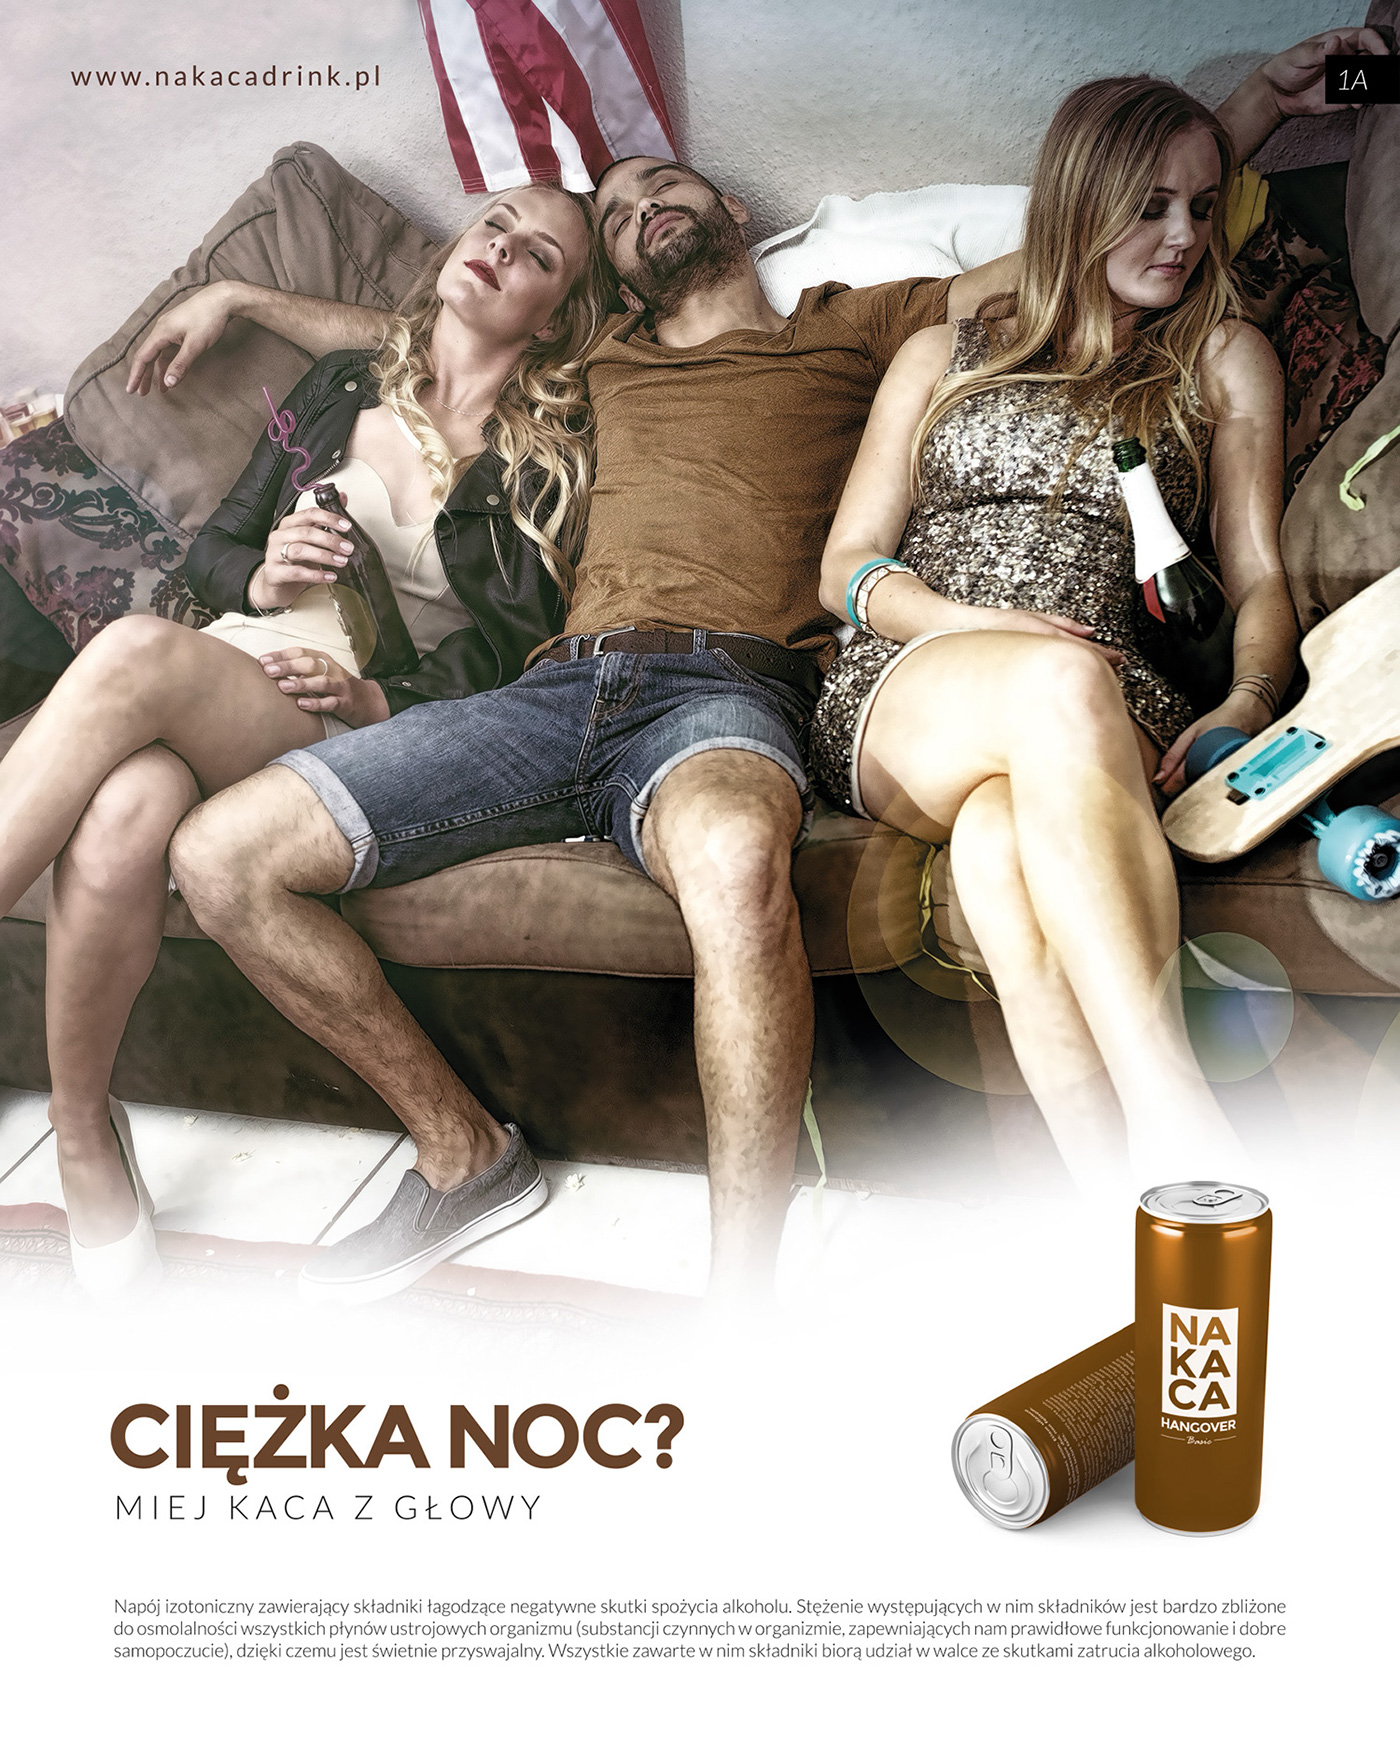 reklama advert concept nakaca drink tv press creative kaboom design mariuszmalecki